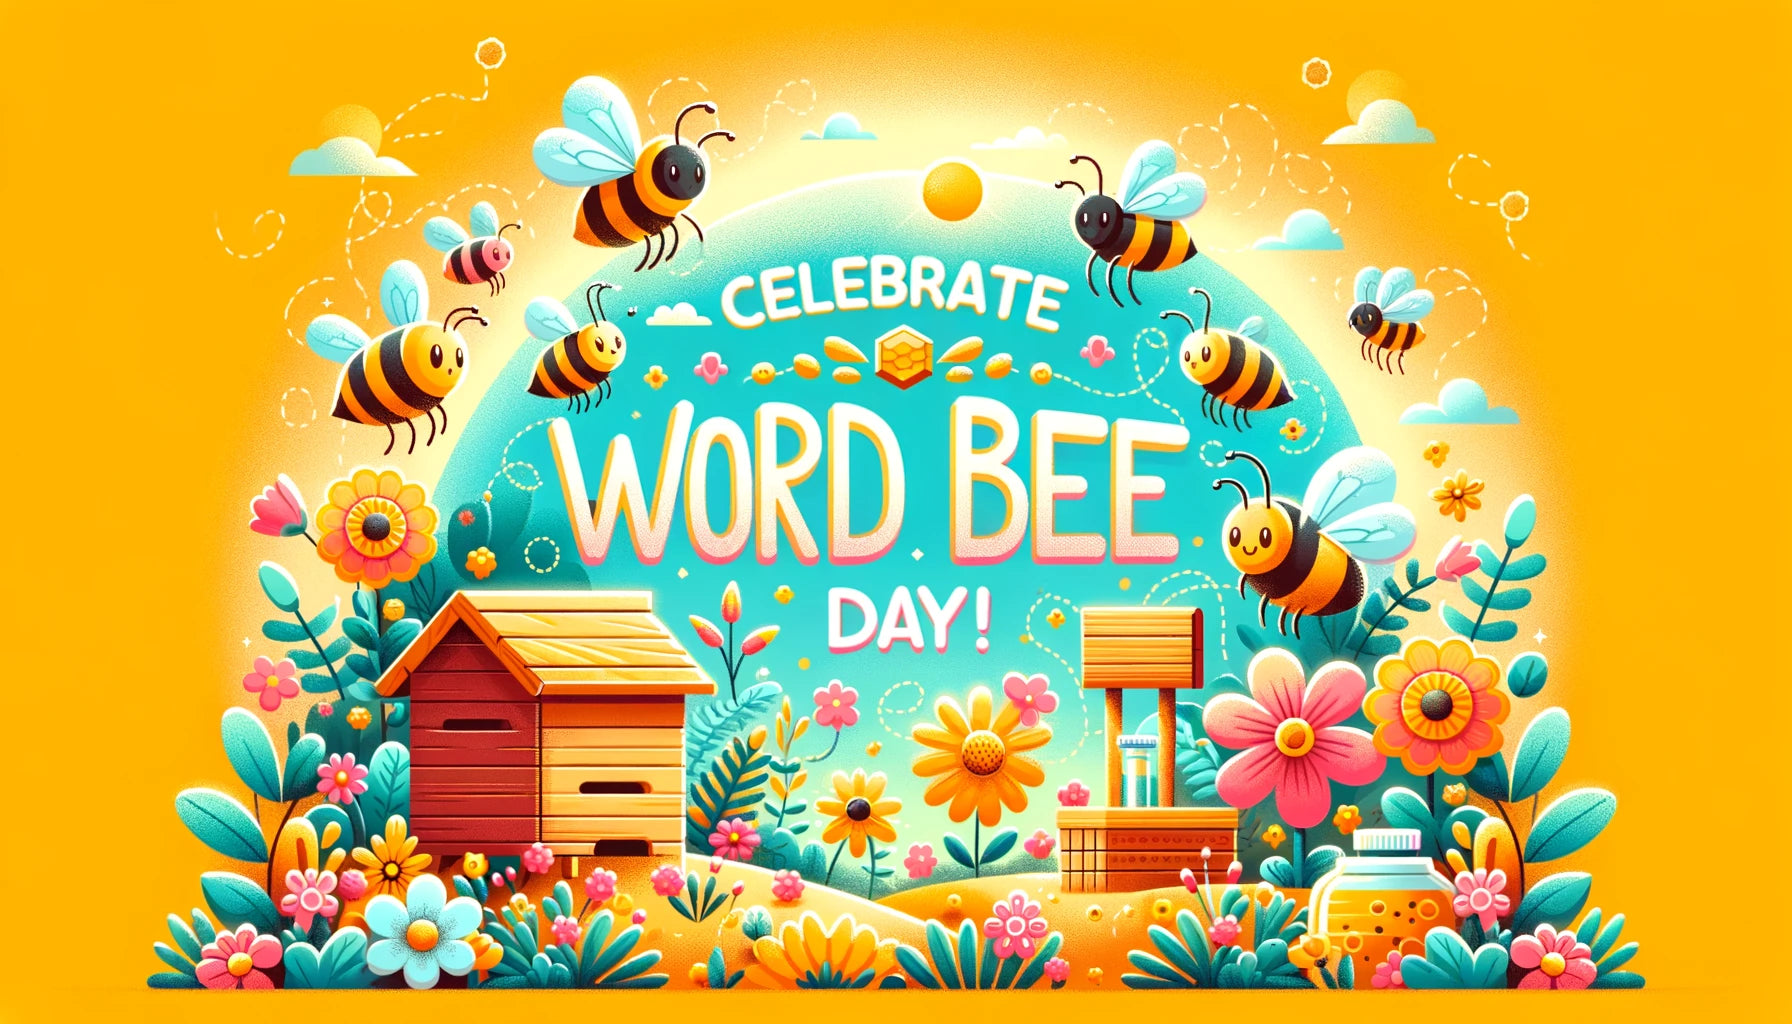 Buzzing with Joy: Celebrating World Bee Day!